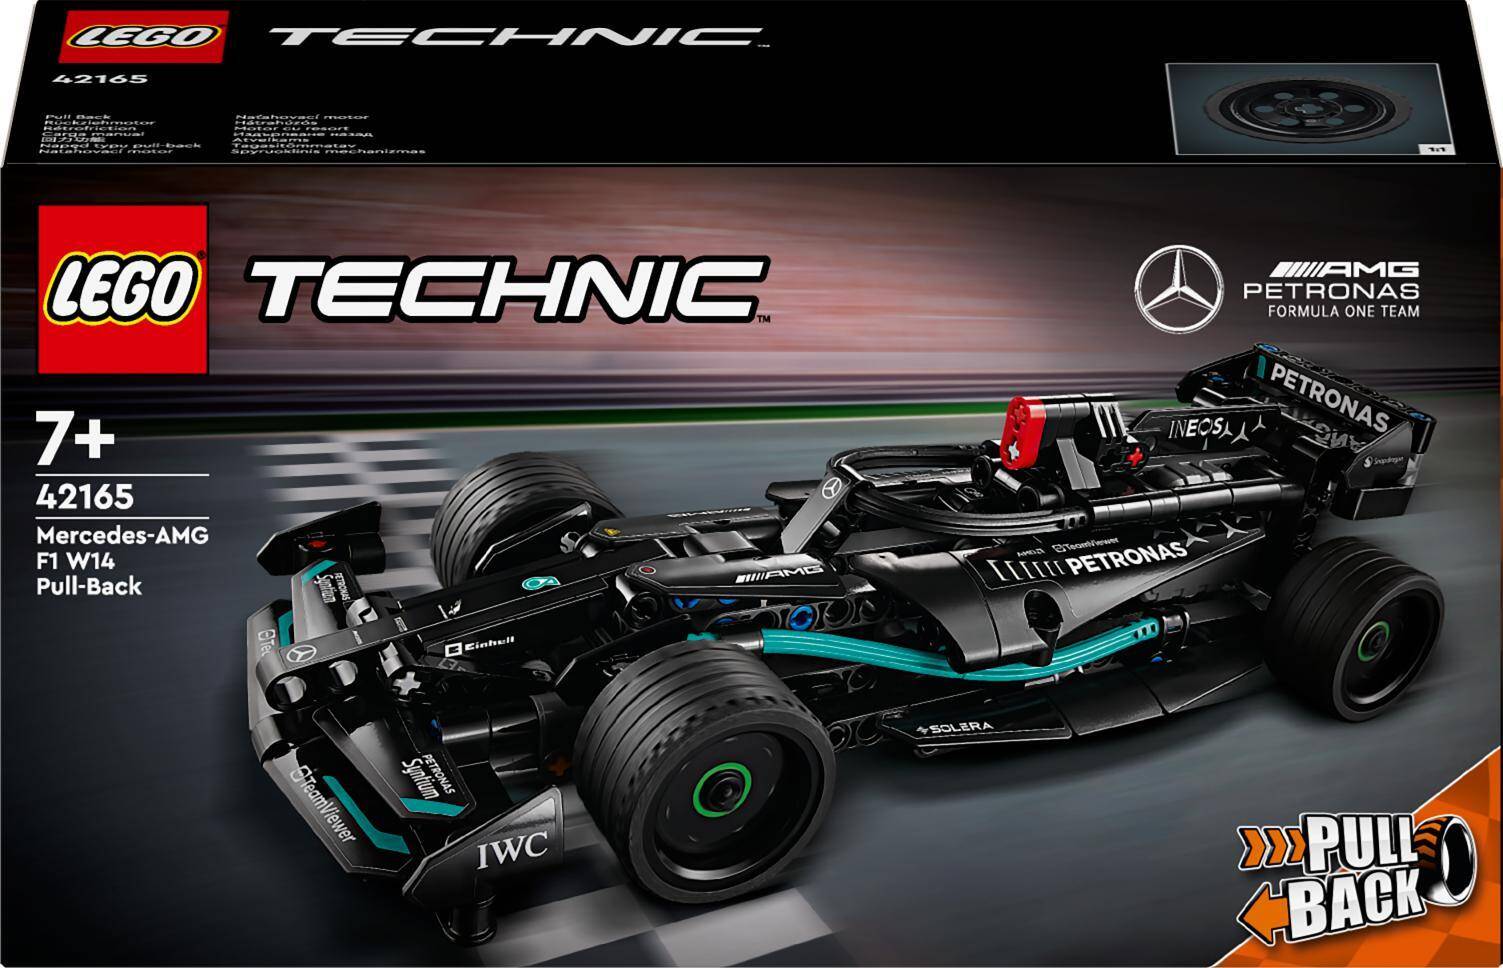 LEGO ®42165 TECHNIC MERCEDES-AMG F1 W14 E PERFORMANCE PULL-BACK